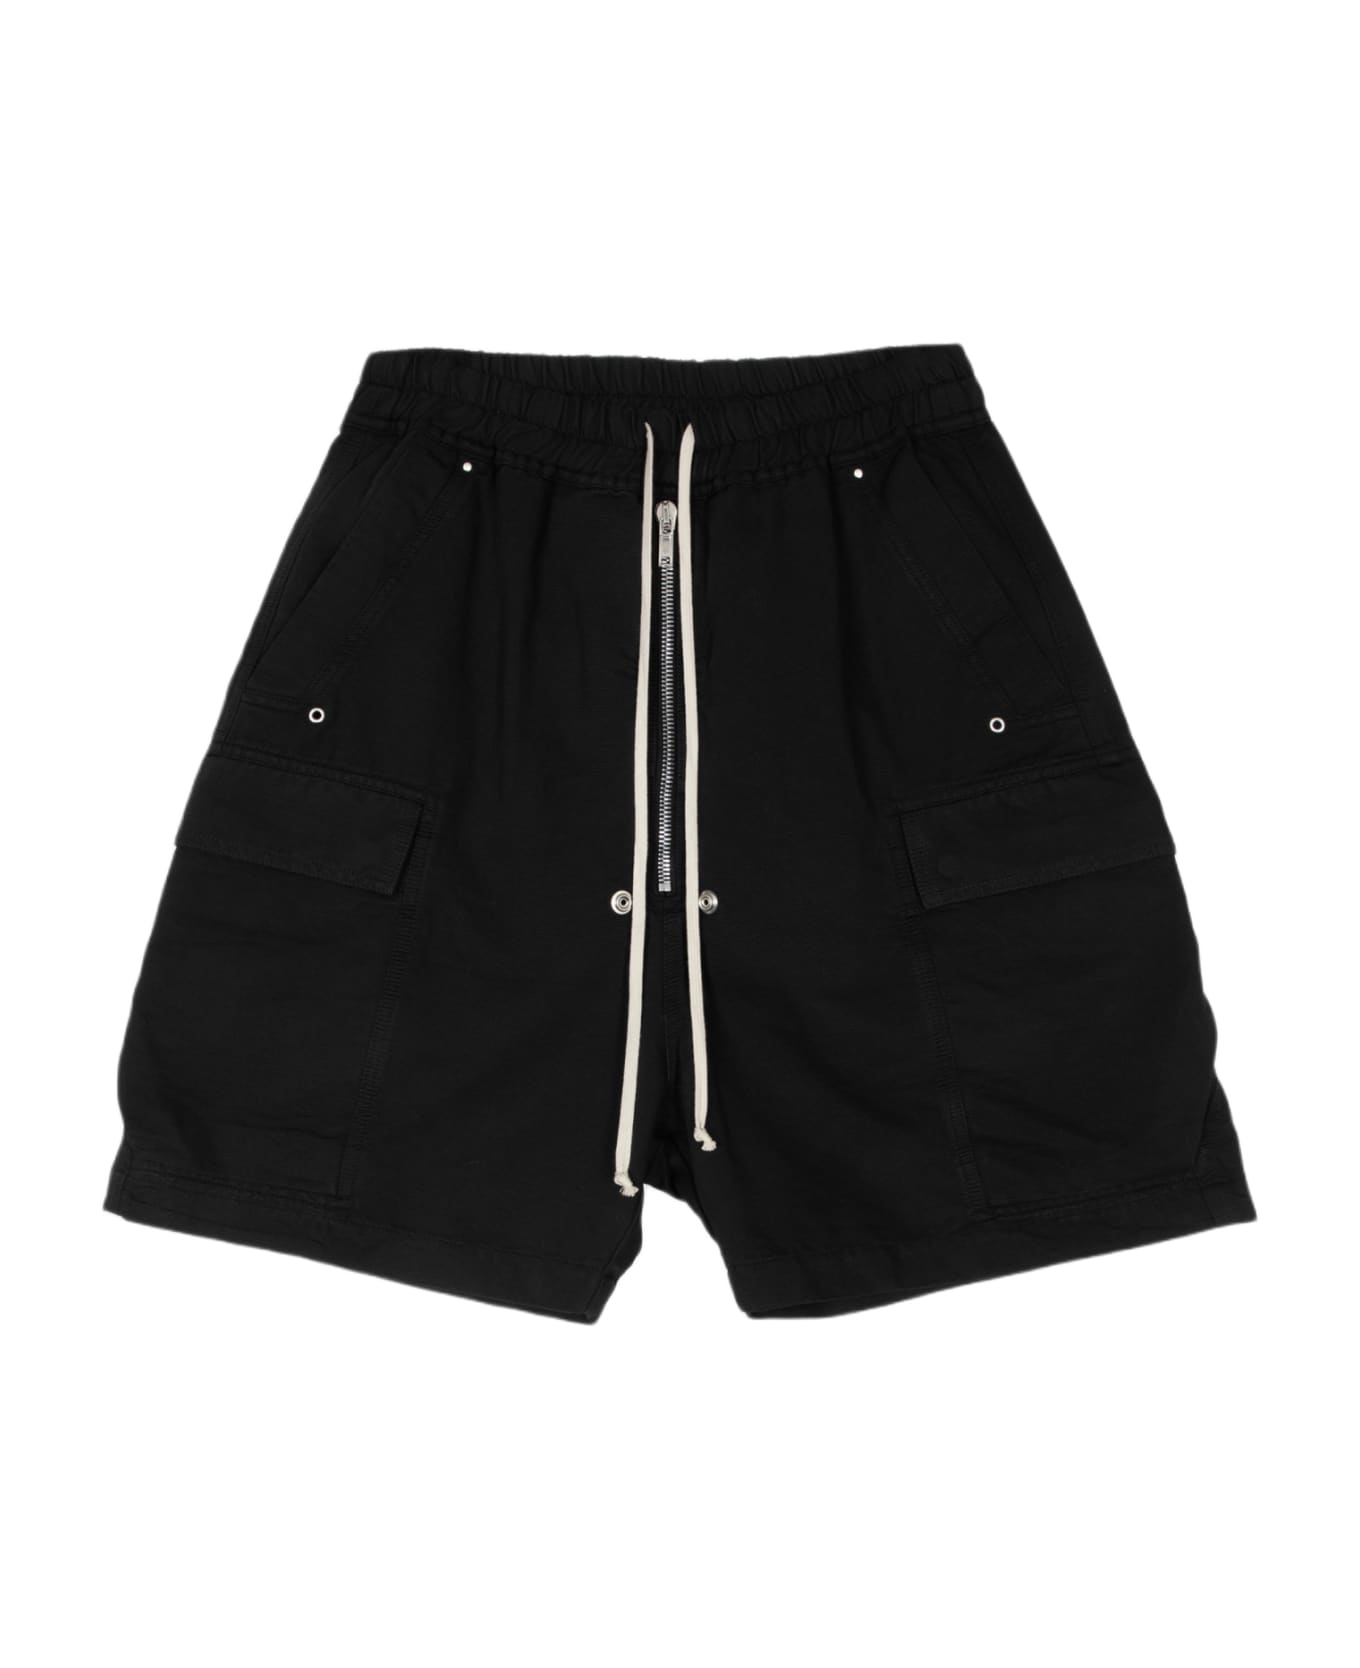 DRKSHDW Cargobela Shorts Black cotton baggy cargo shorts - Cargobela Shorts - Nero